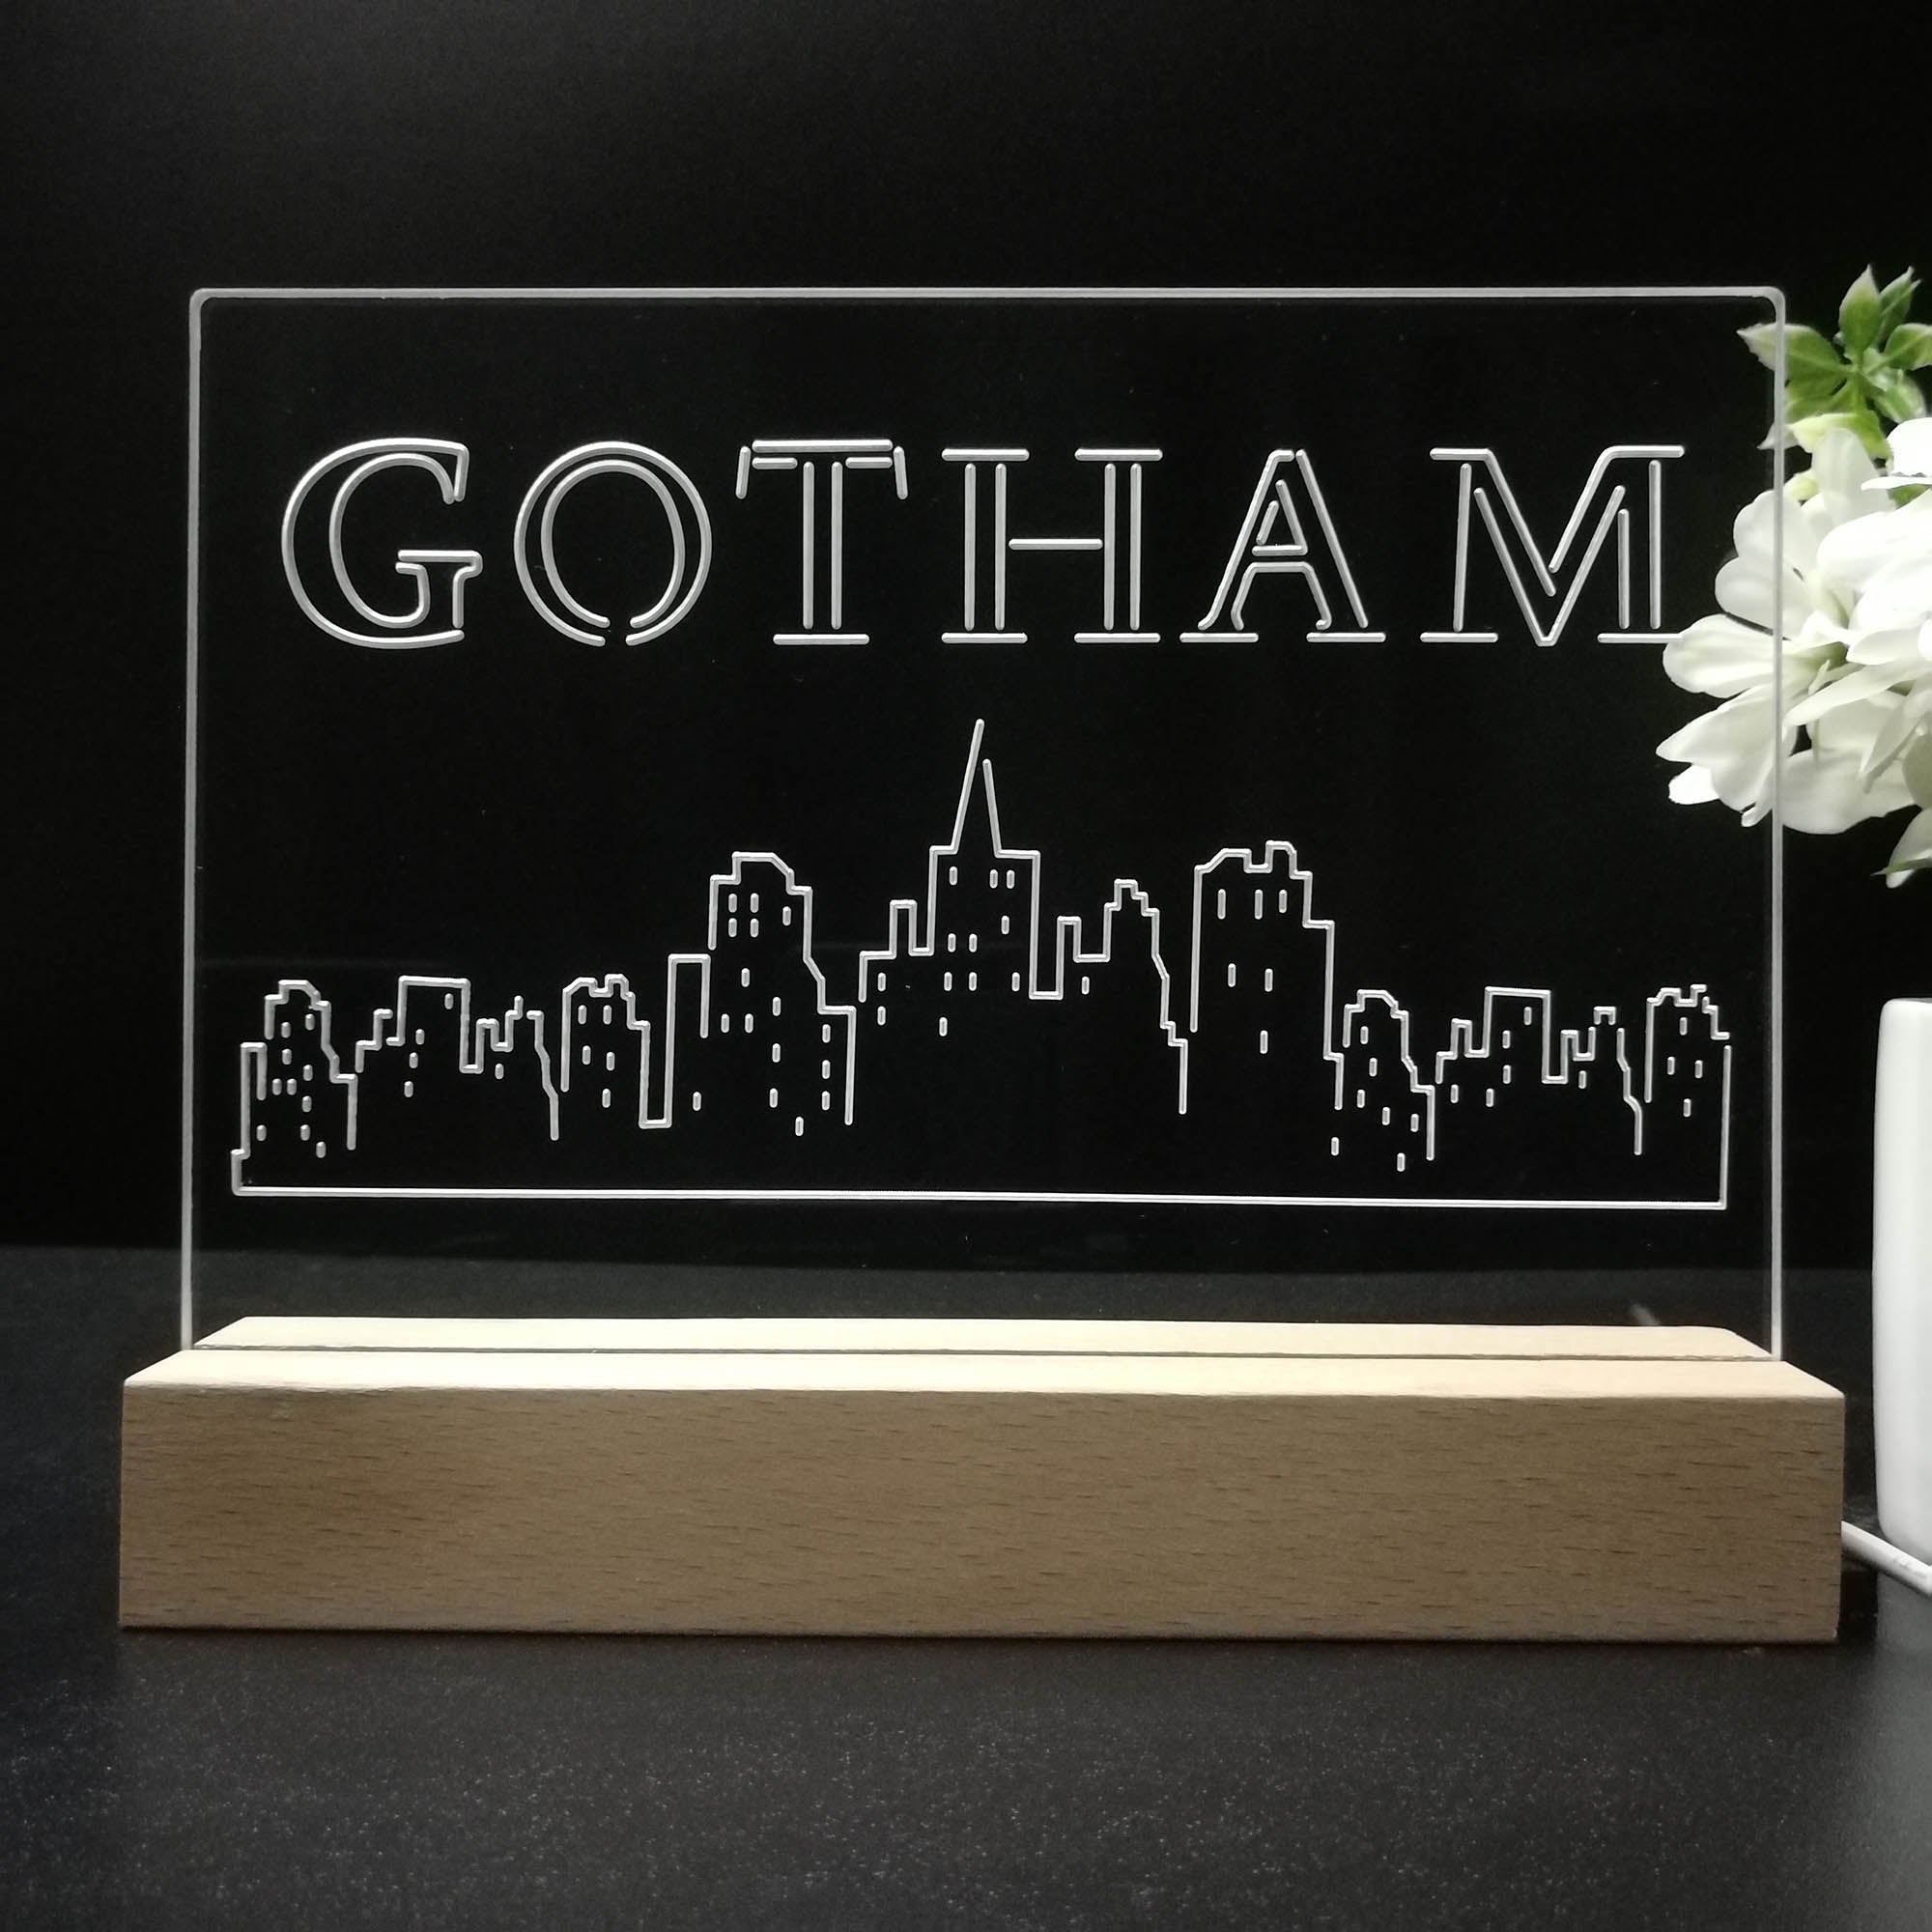 Gotham Night Light LED Sign